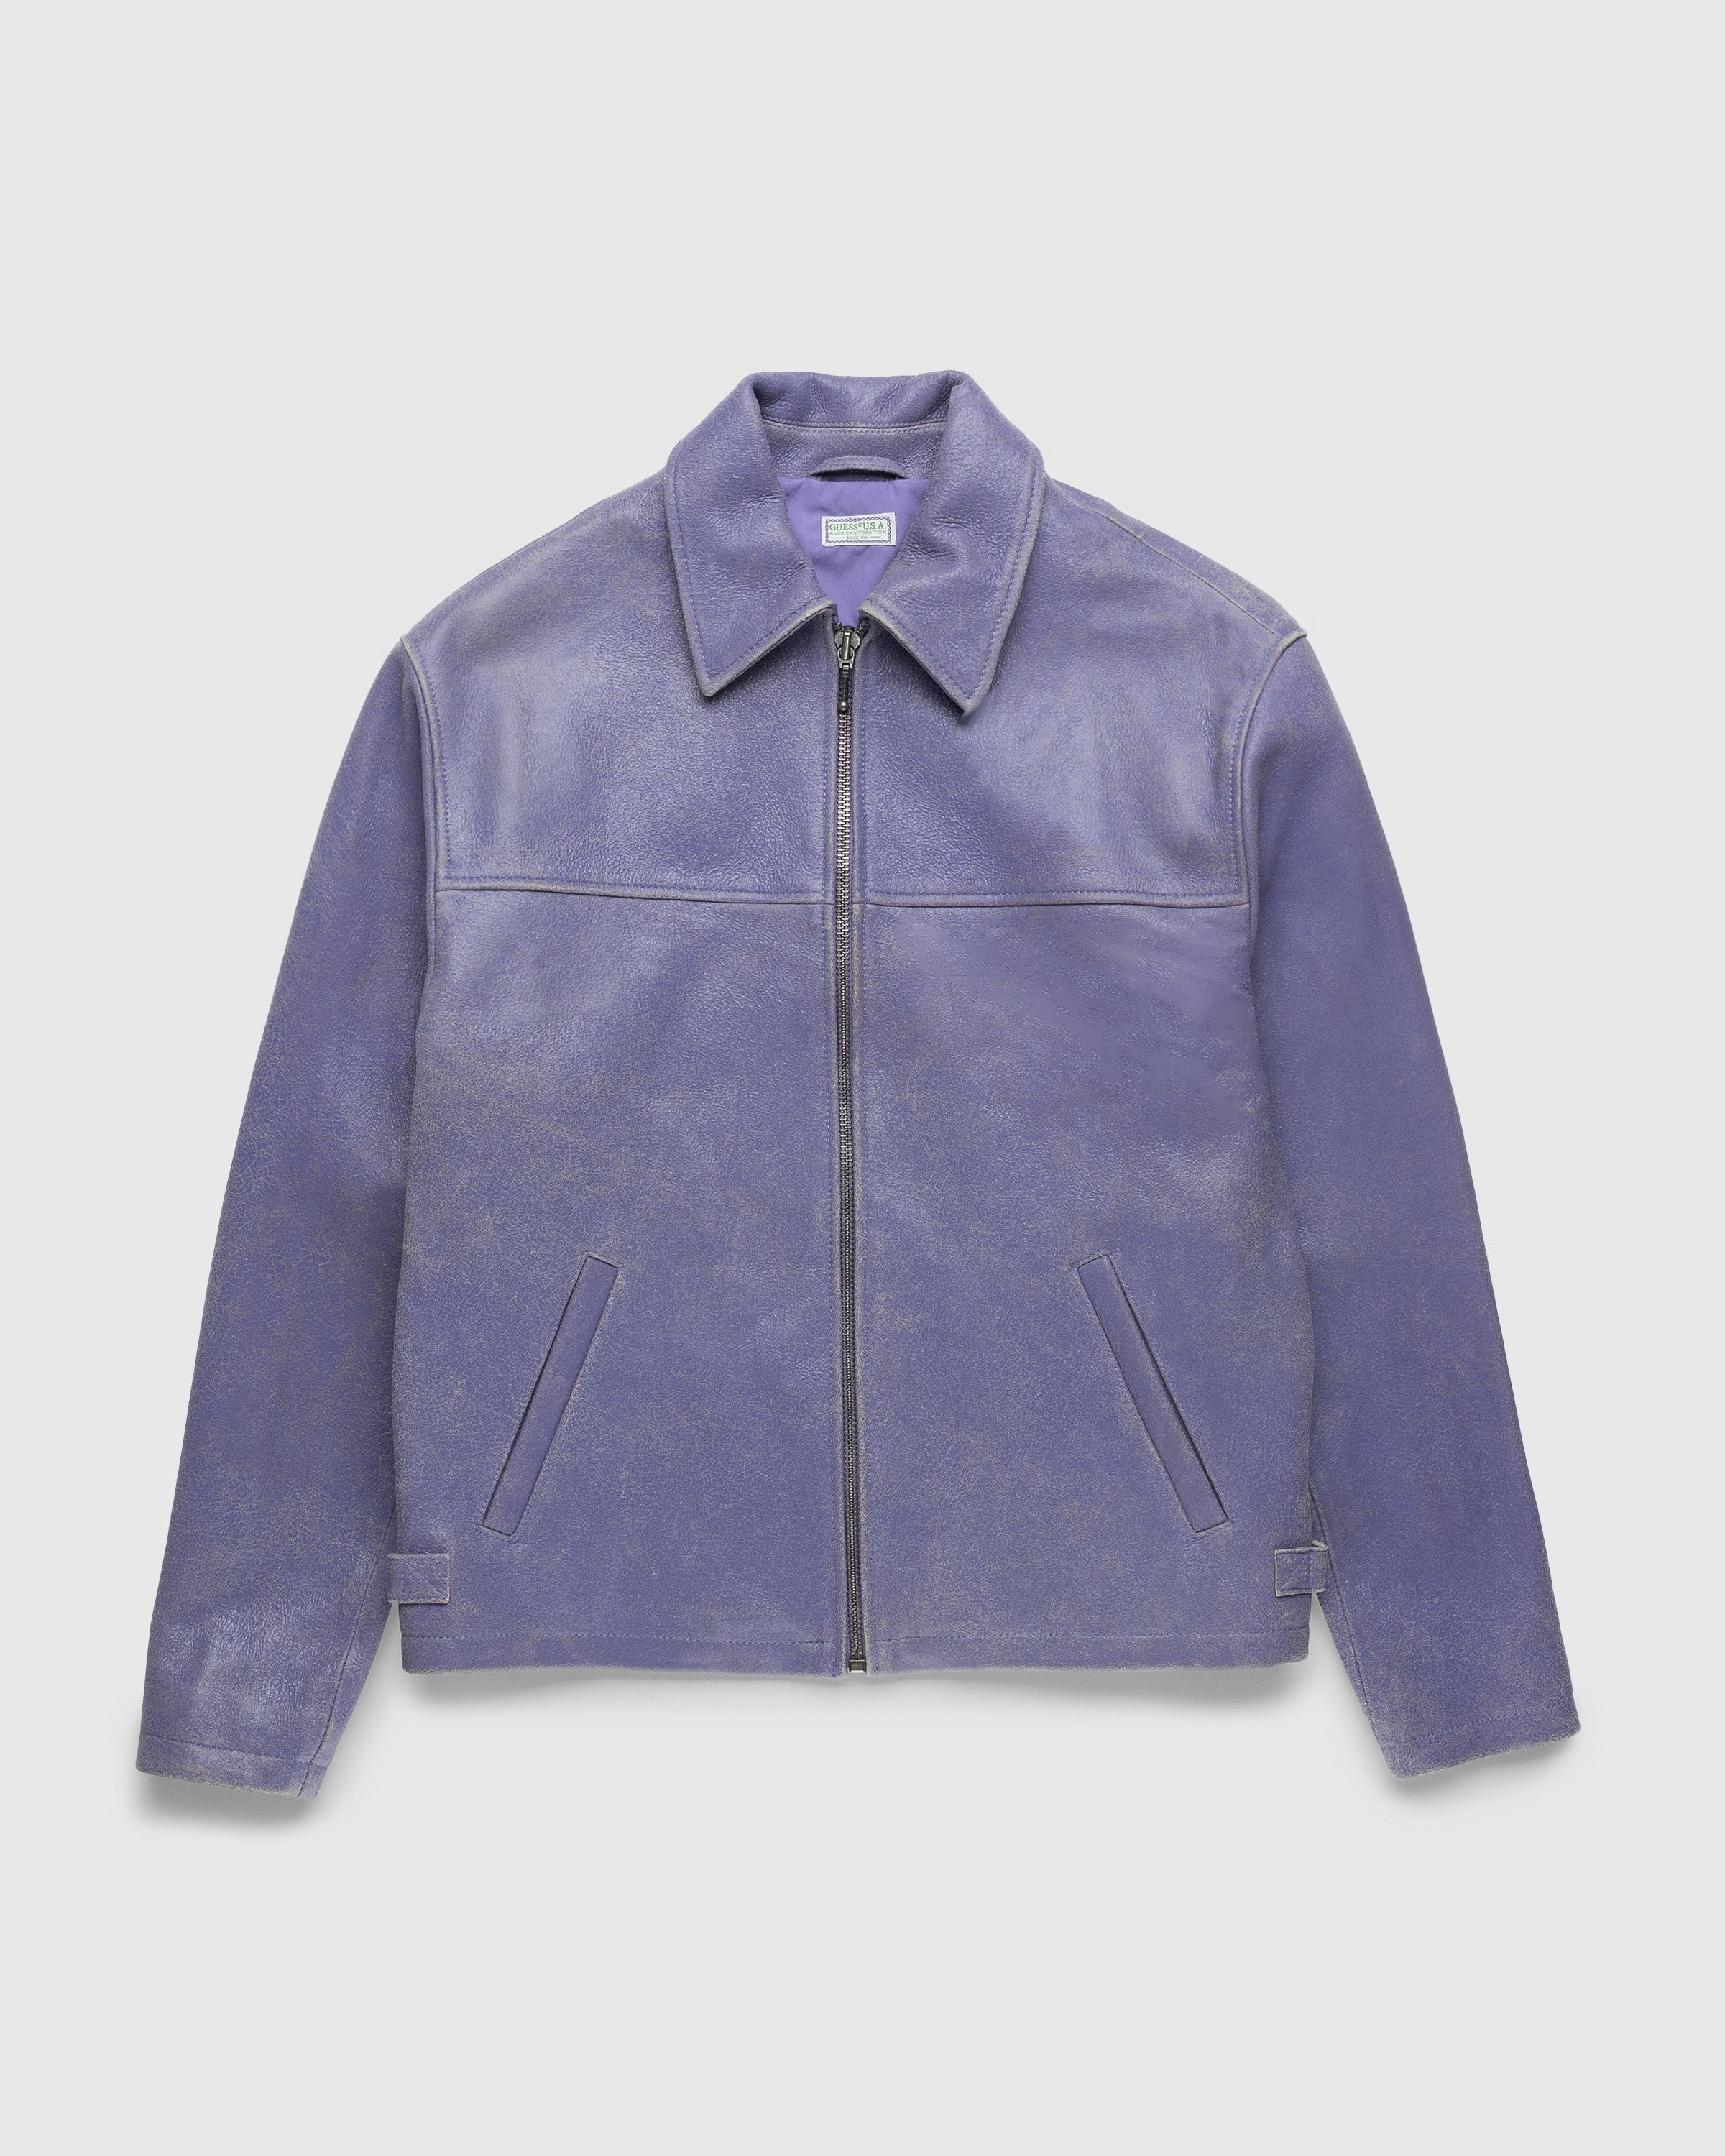 Guess USA – Crackle Leather Jacket Purple | Highsnobiety Shop